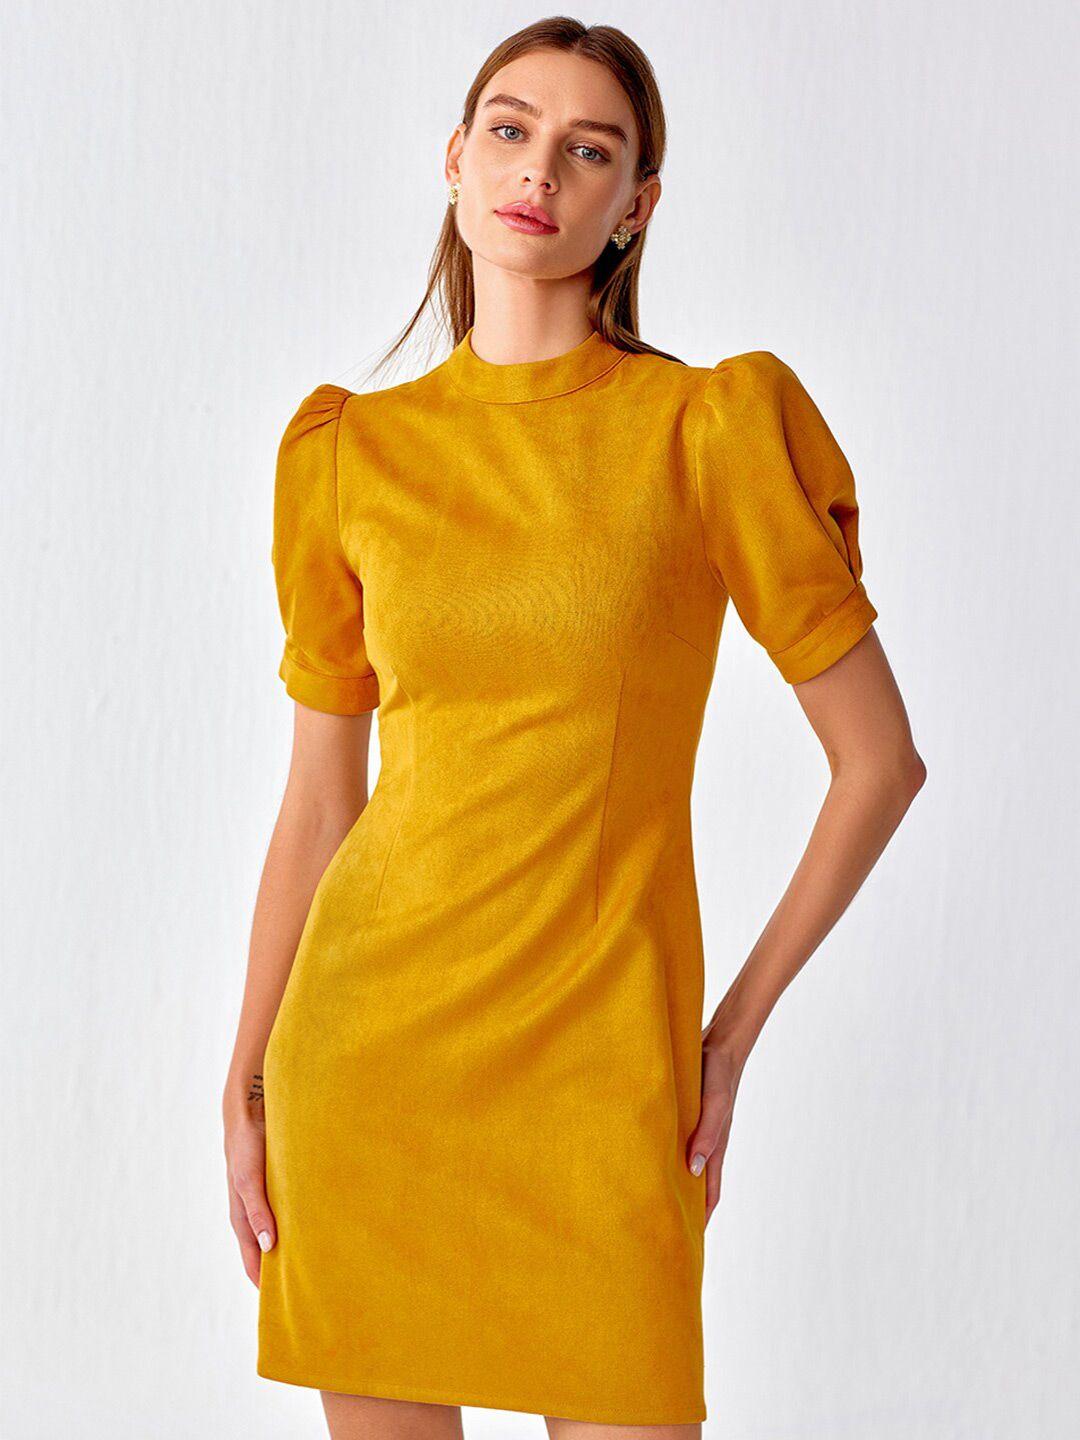 cover story mustard yellow dress